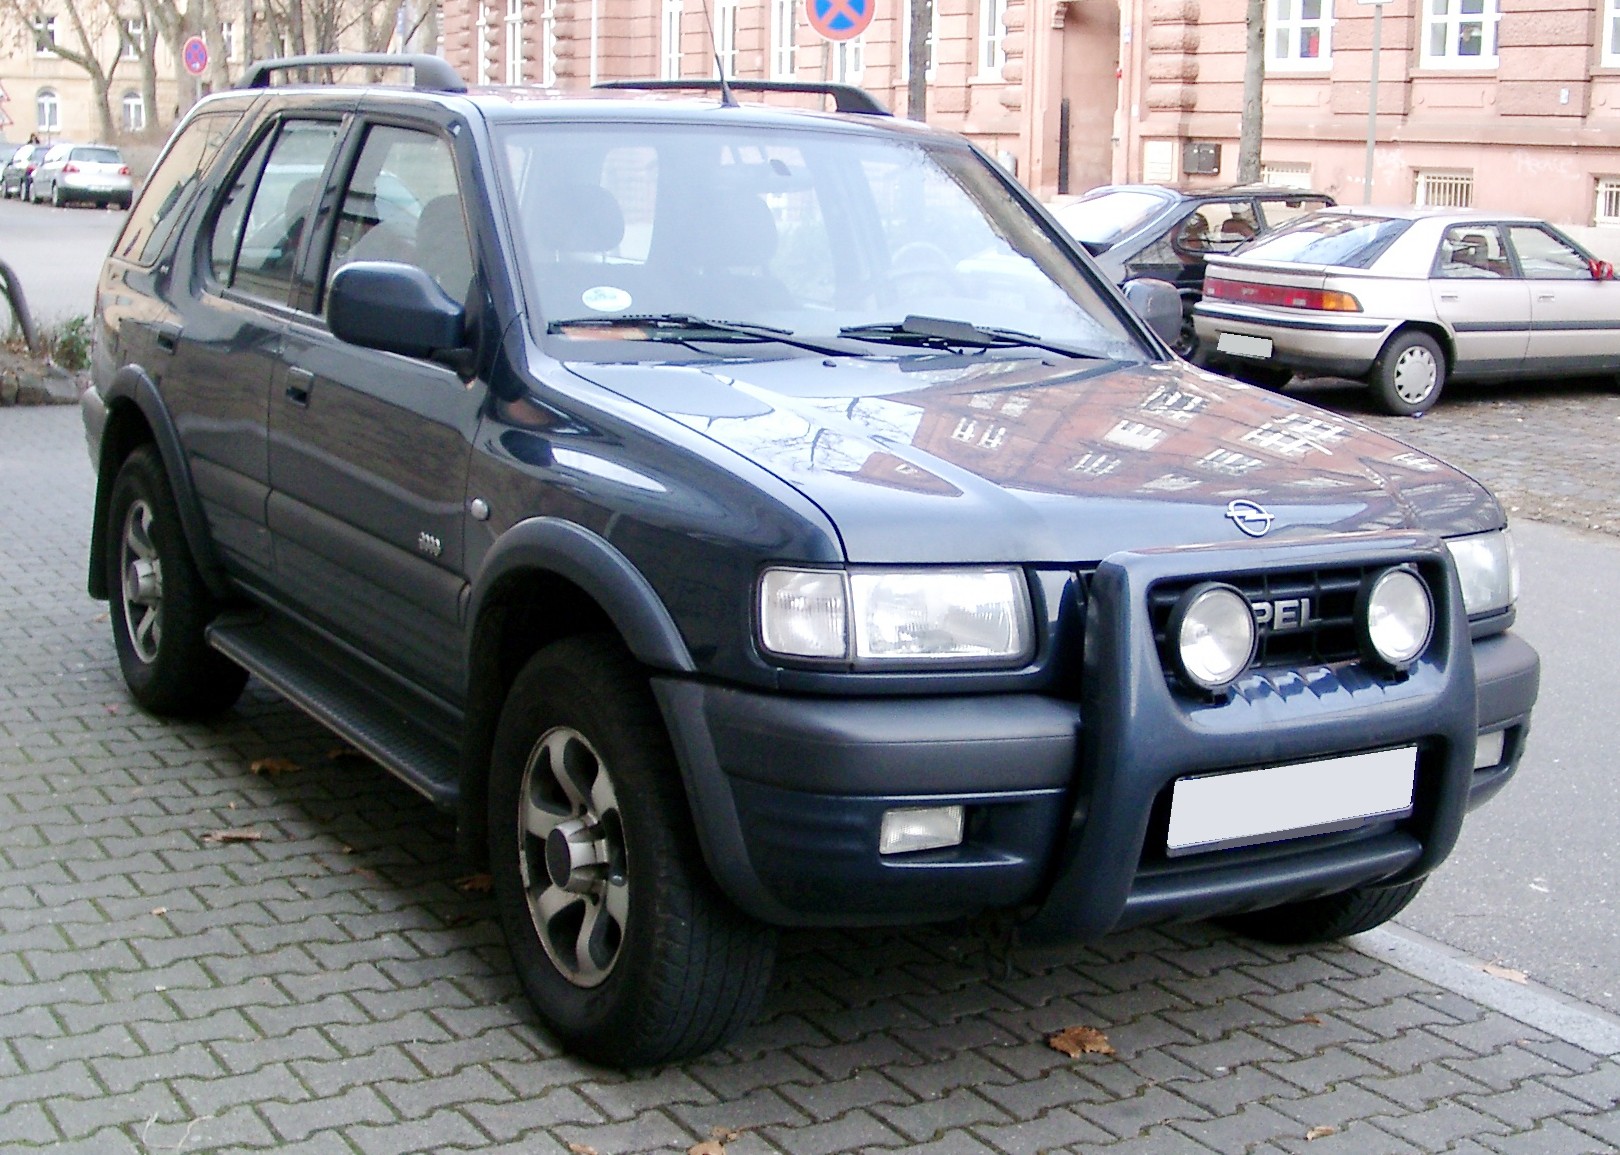 File:Opel Frontera front 20080108.jpg